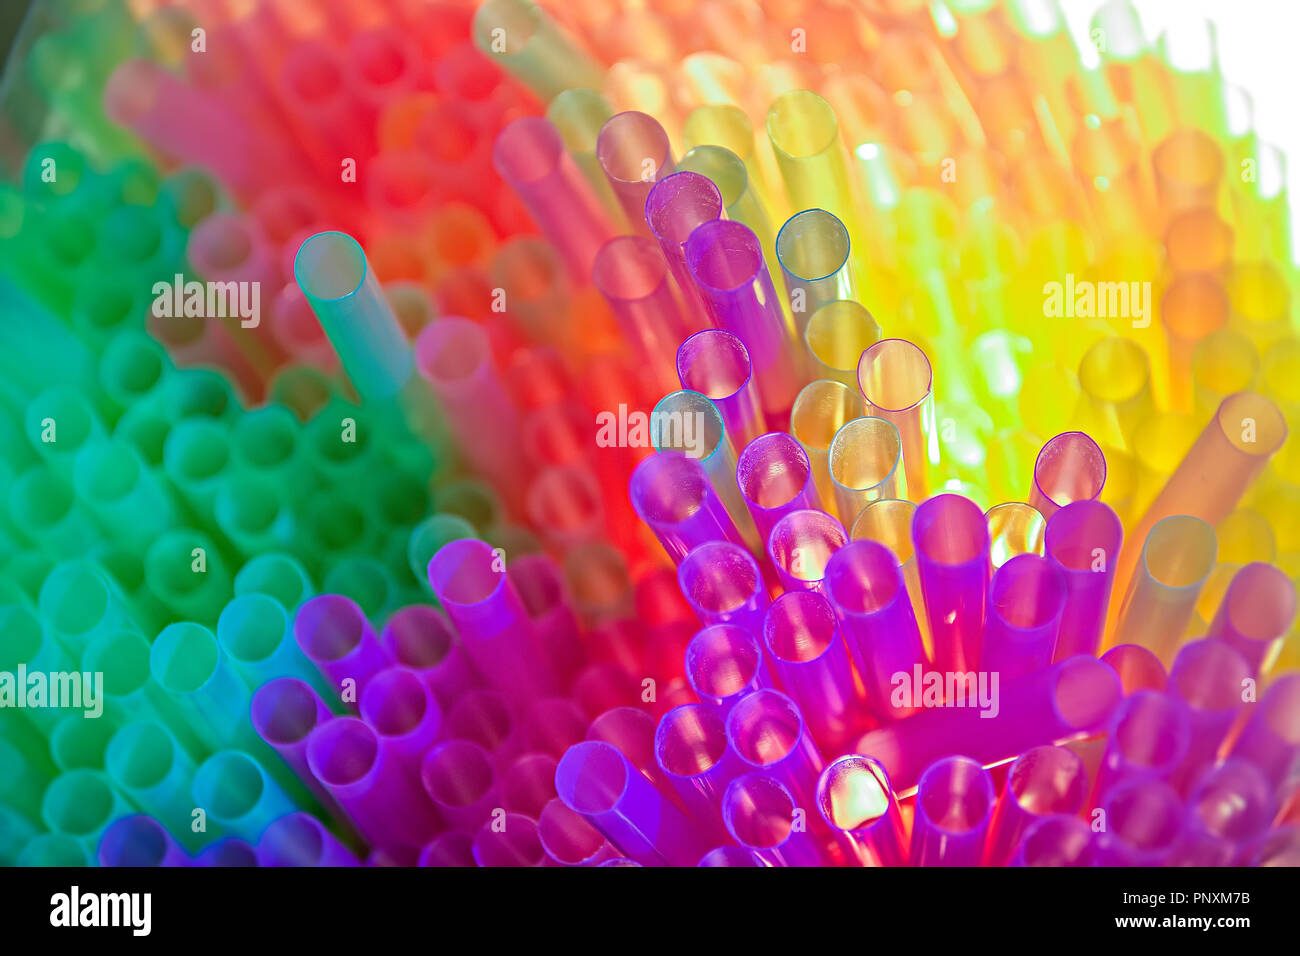 Abstract image of light illuminating coloured drinking straws. Stock Photo